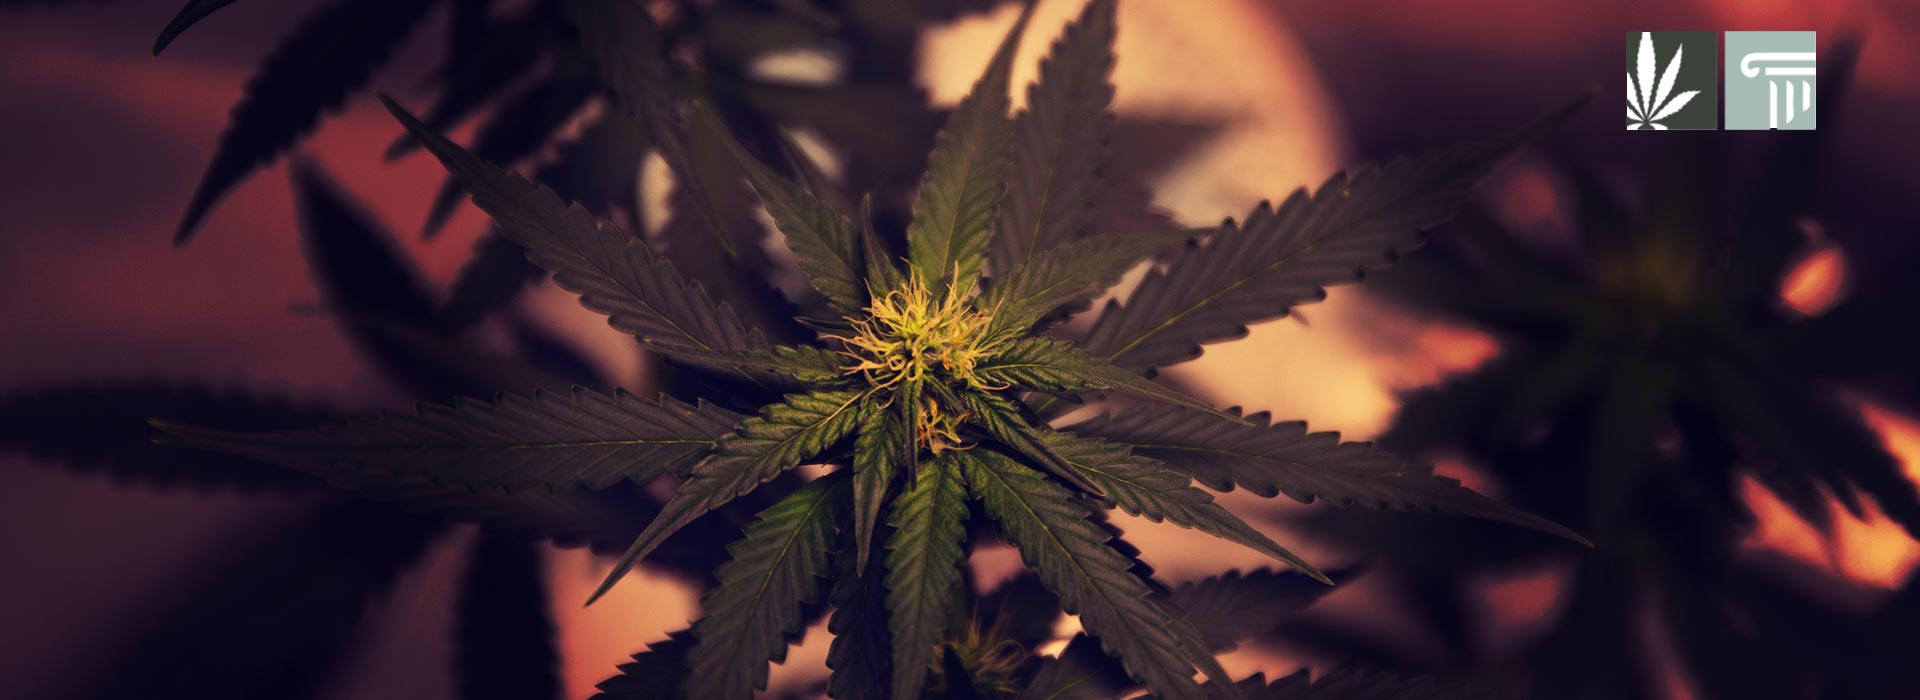 delaware governor vetoes marijuana decriminalization measure